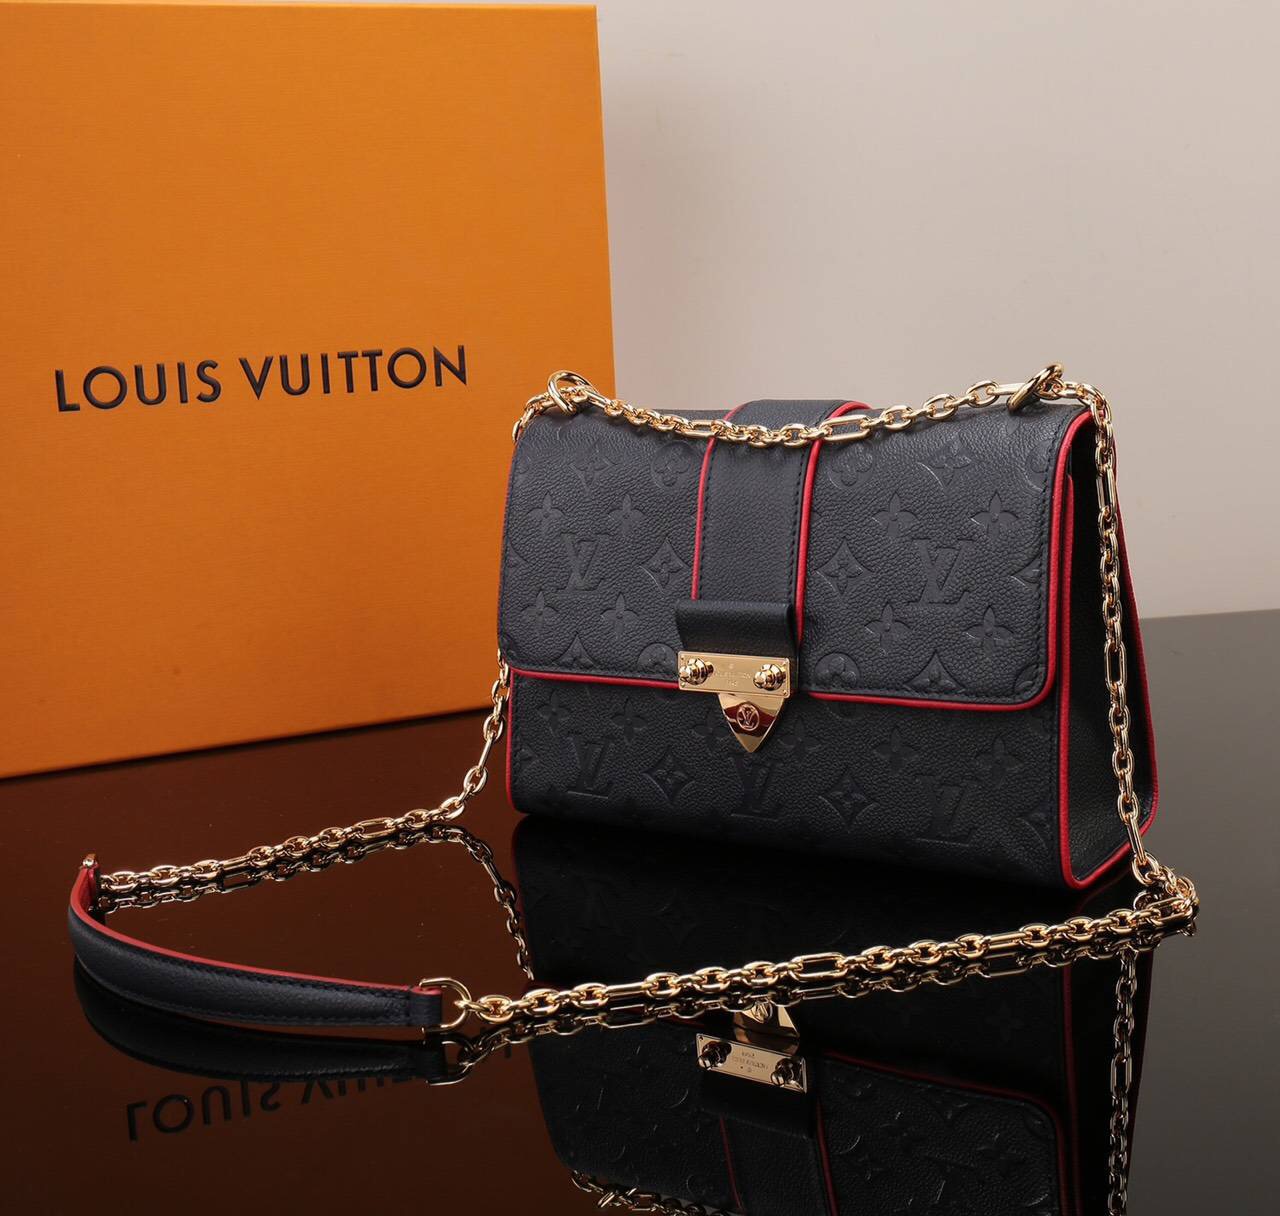 LV Louis Vuitton Saint Sulpice Monogram Real M43394 Leather Handbags bags Black [LV1001] - $379 ...